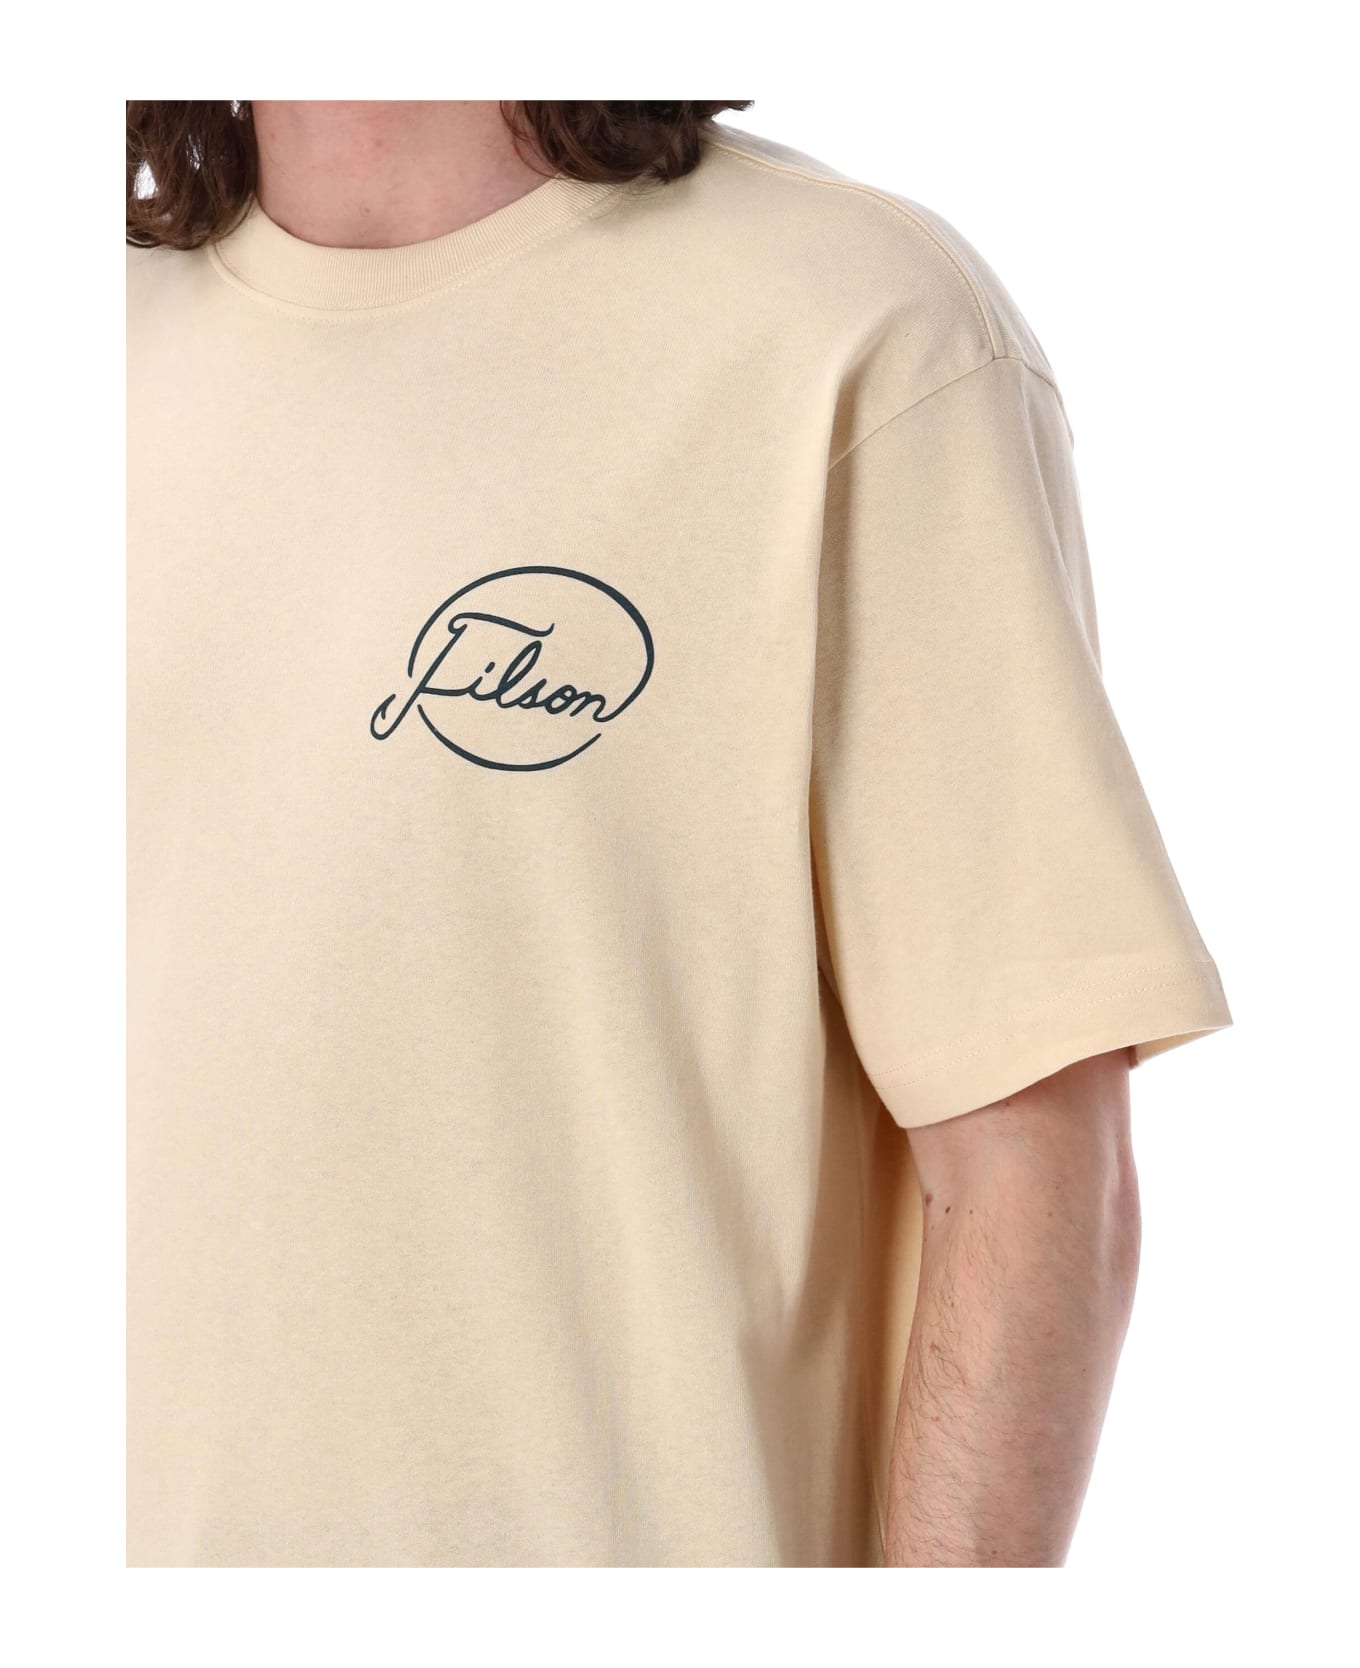 Filson Pioneer Graphic T-shirt - STONE